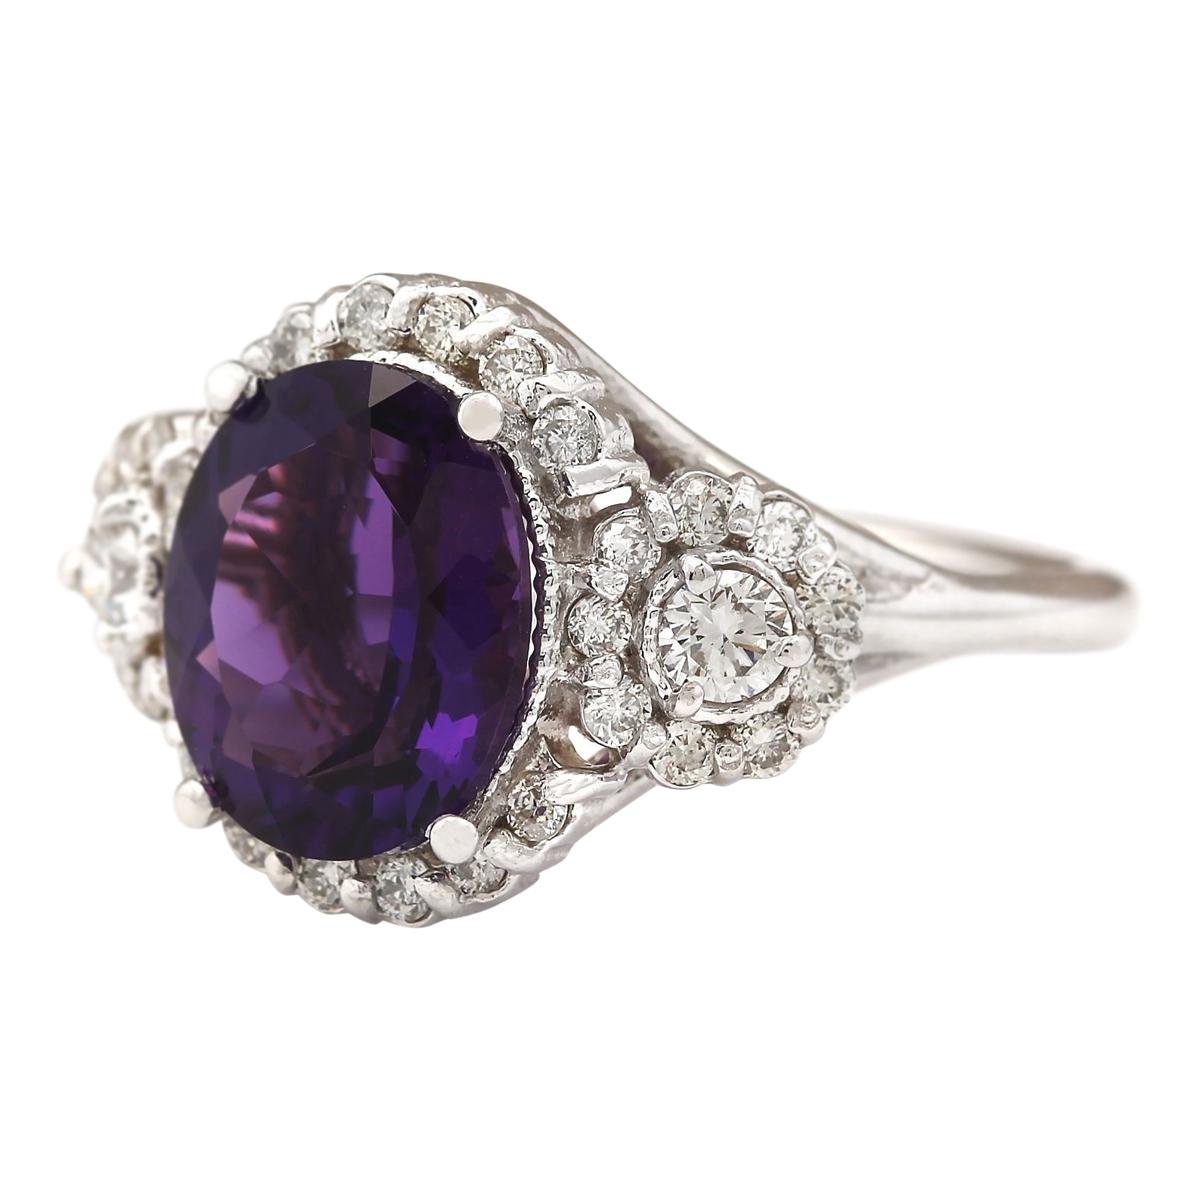 4.42 Carat Natural Amethyst 14 Karat White Gold Diamond Ring
Stamped: 14K White Gold
Total Ring Weight: 5.9 Grams
Total Natural Amethyst Weight is 3.17 Carat (Measures: 11.00x9.00 mm)
Color: Purple
Total Natural Diamond Weight is 1.25 Carat
Color: